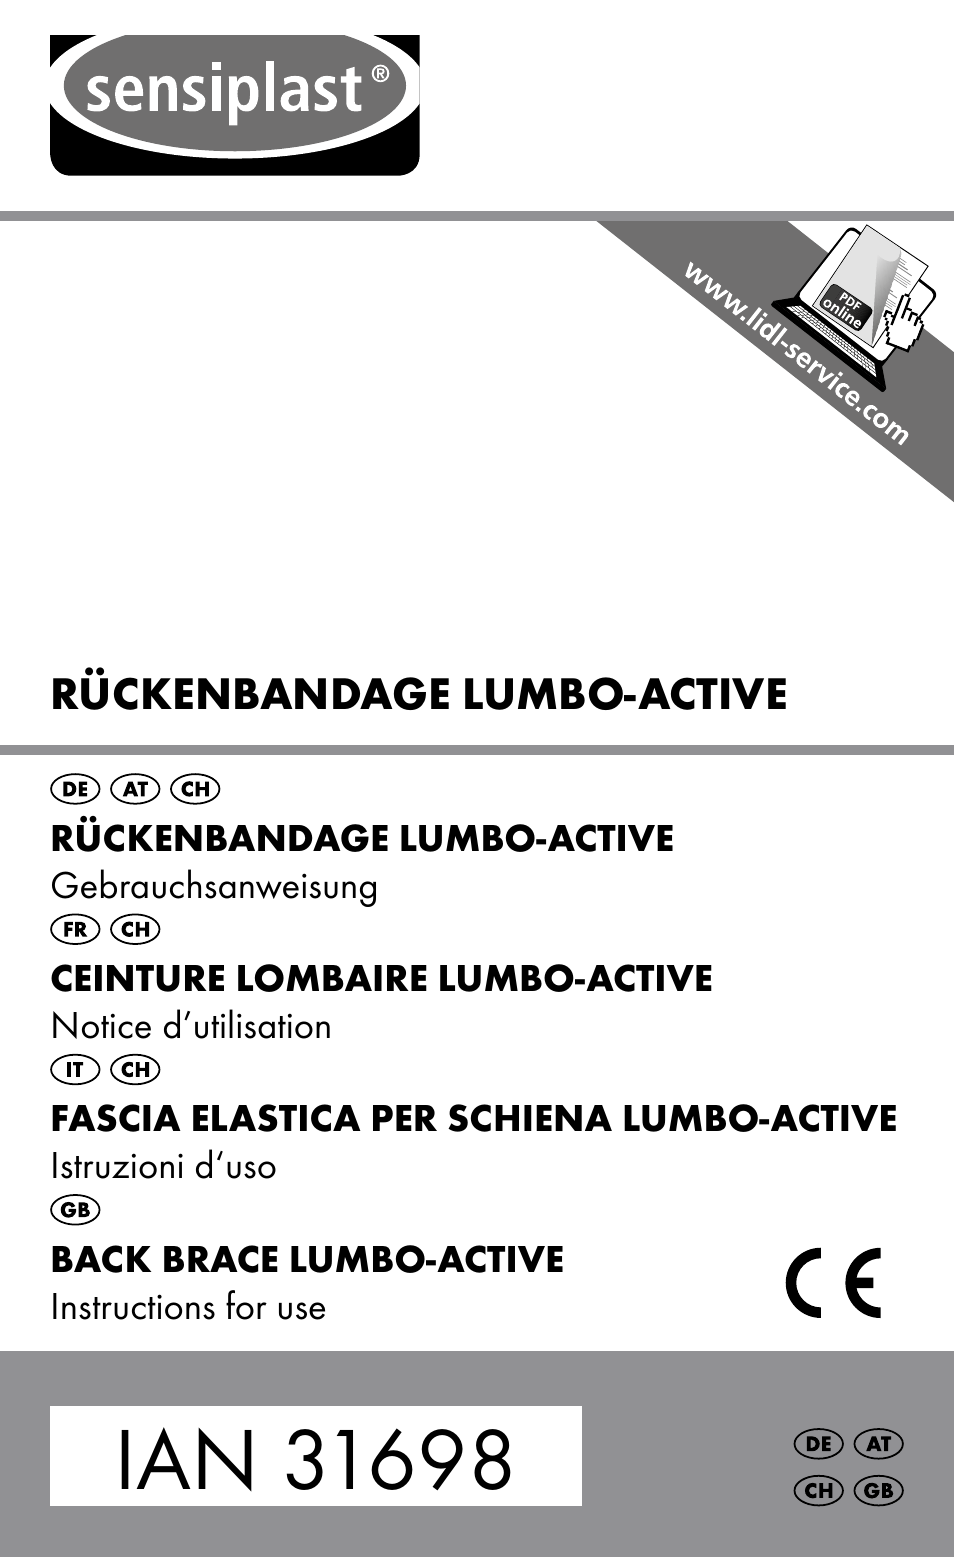 Sensiplast Back Brace / Lumbo-Active User Manual | 24 pages | Also for:  Back Brace